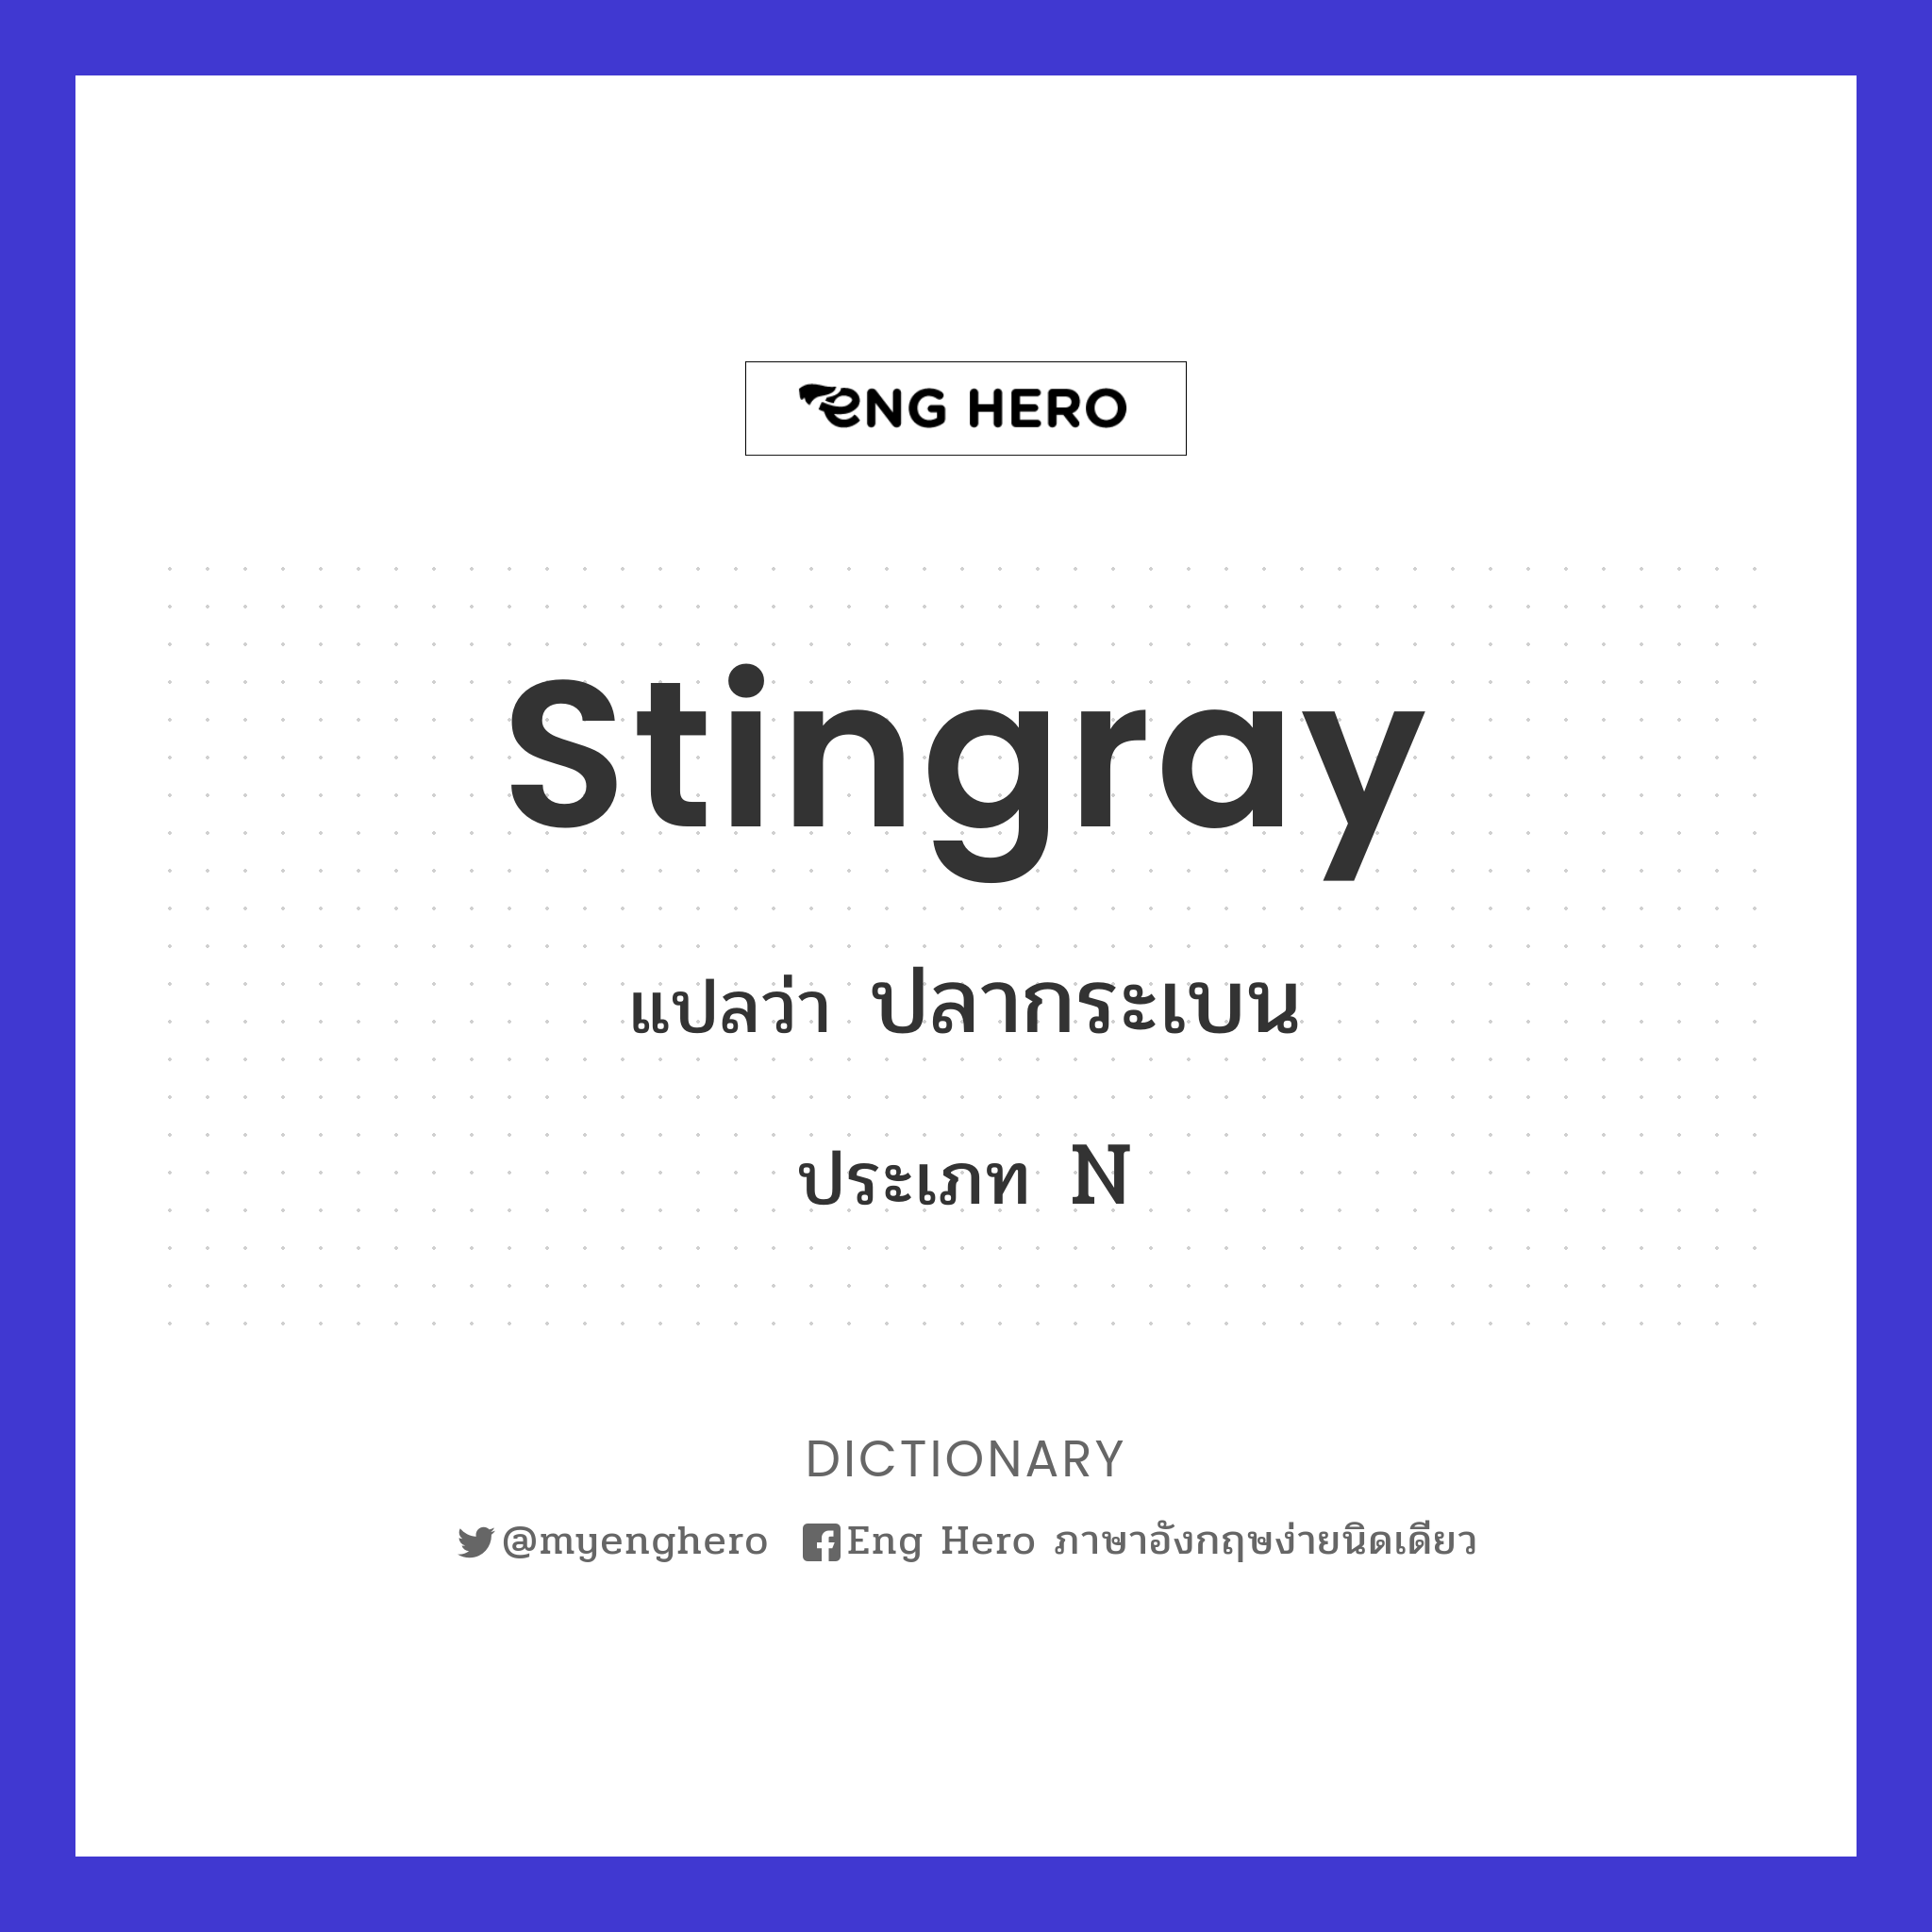 stingray